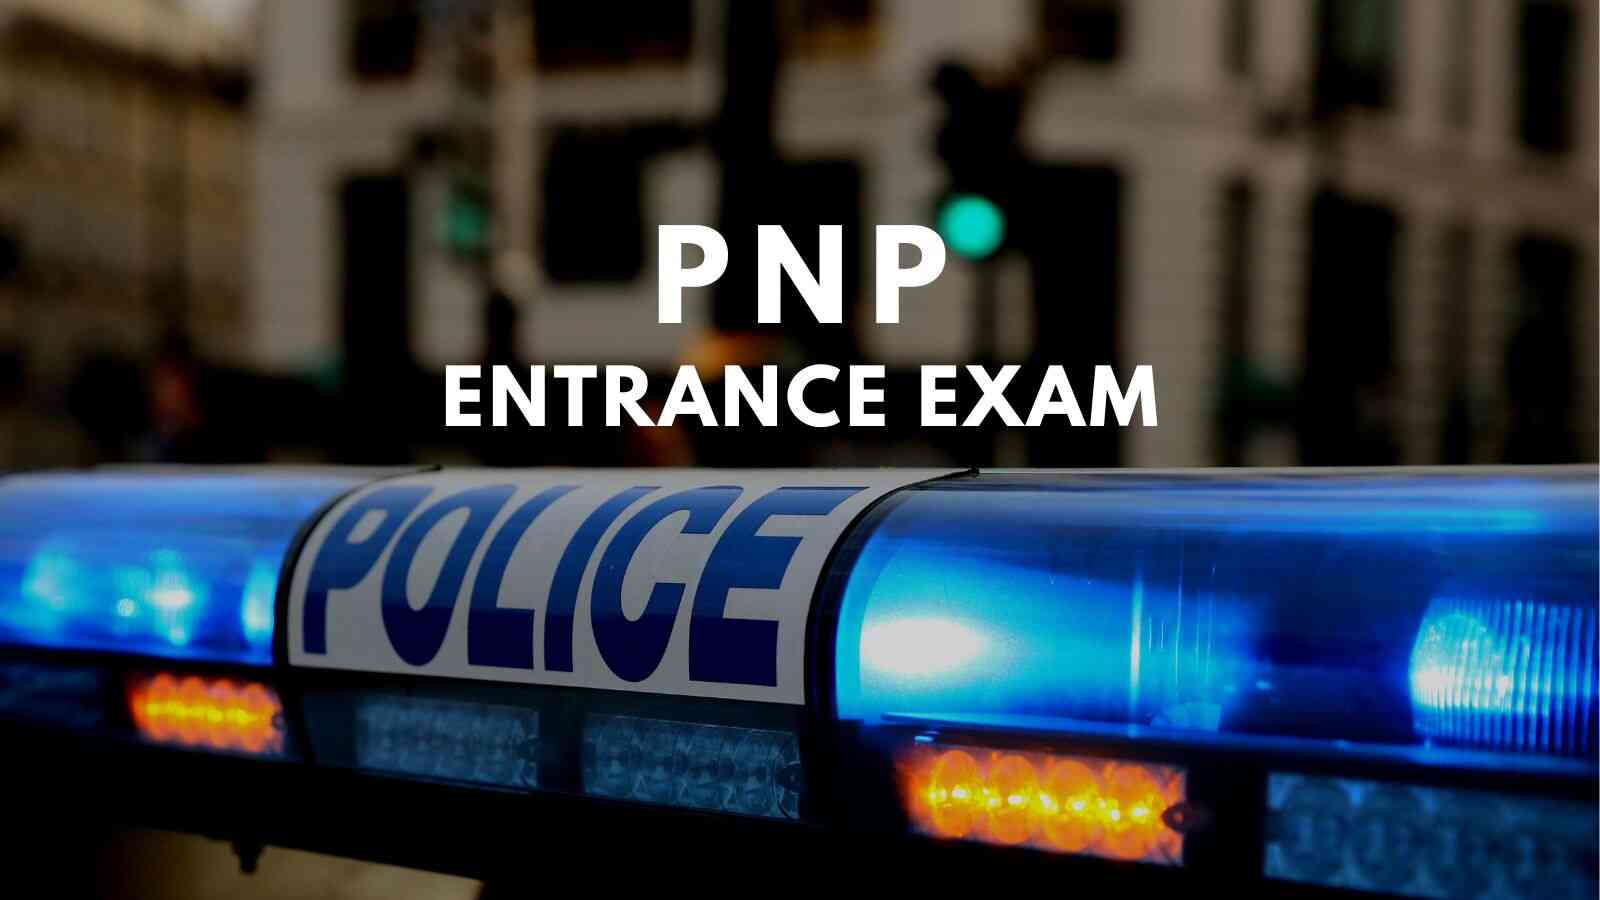 pnp entrance exam online application schedule requirements